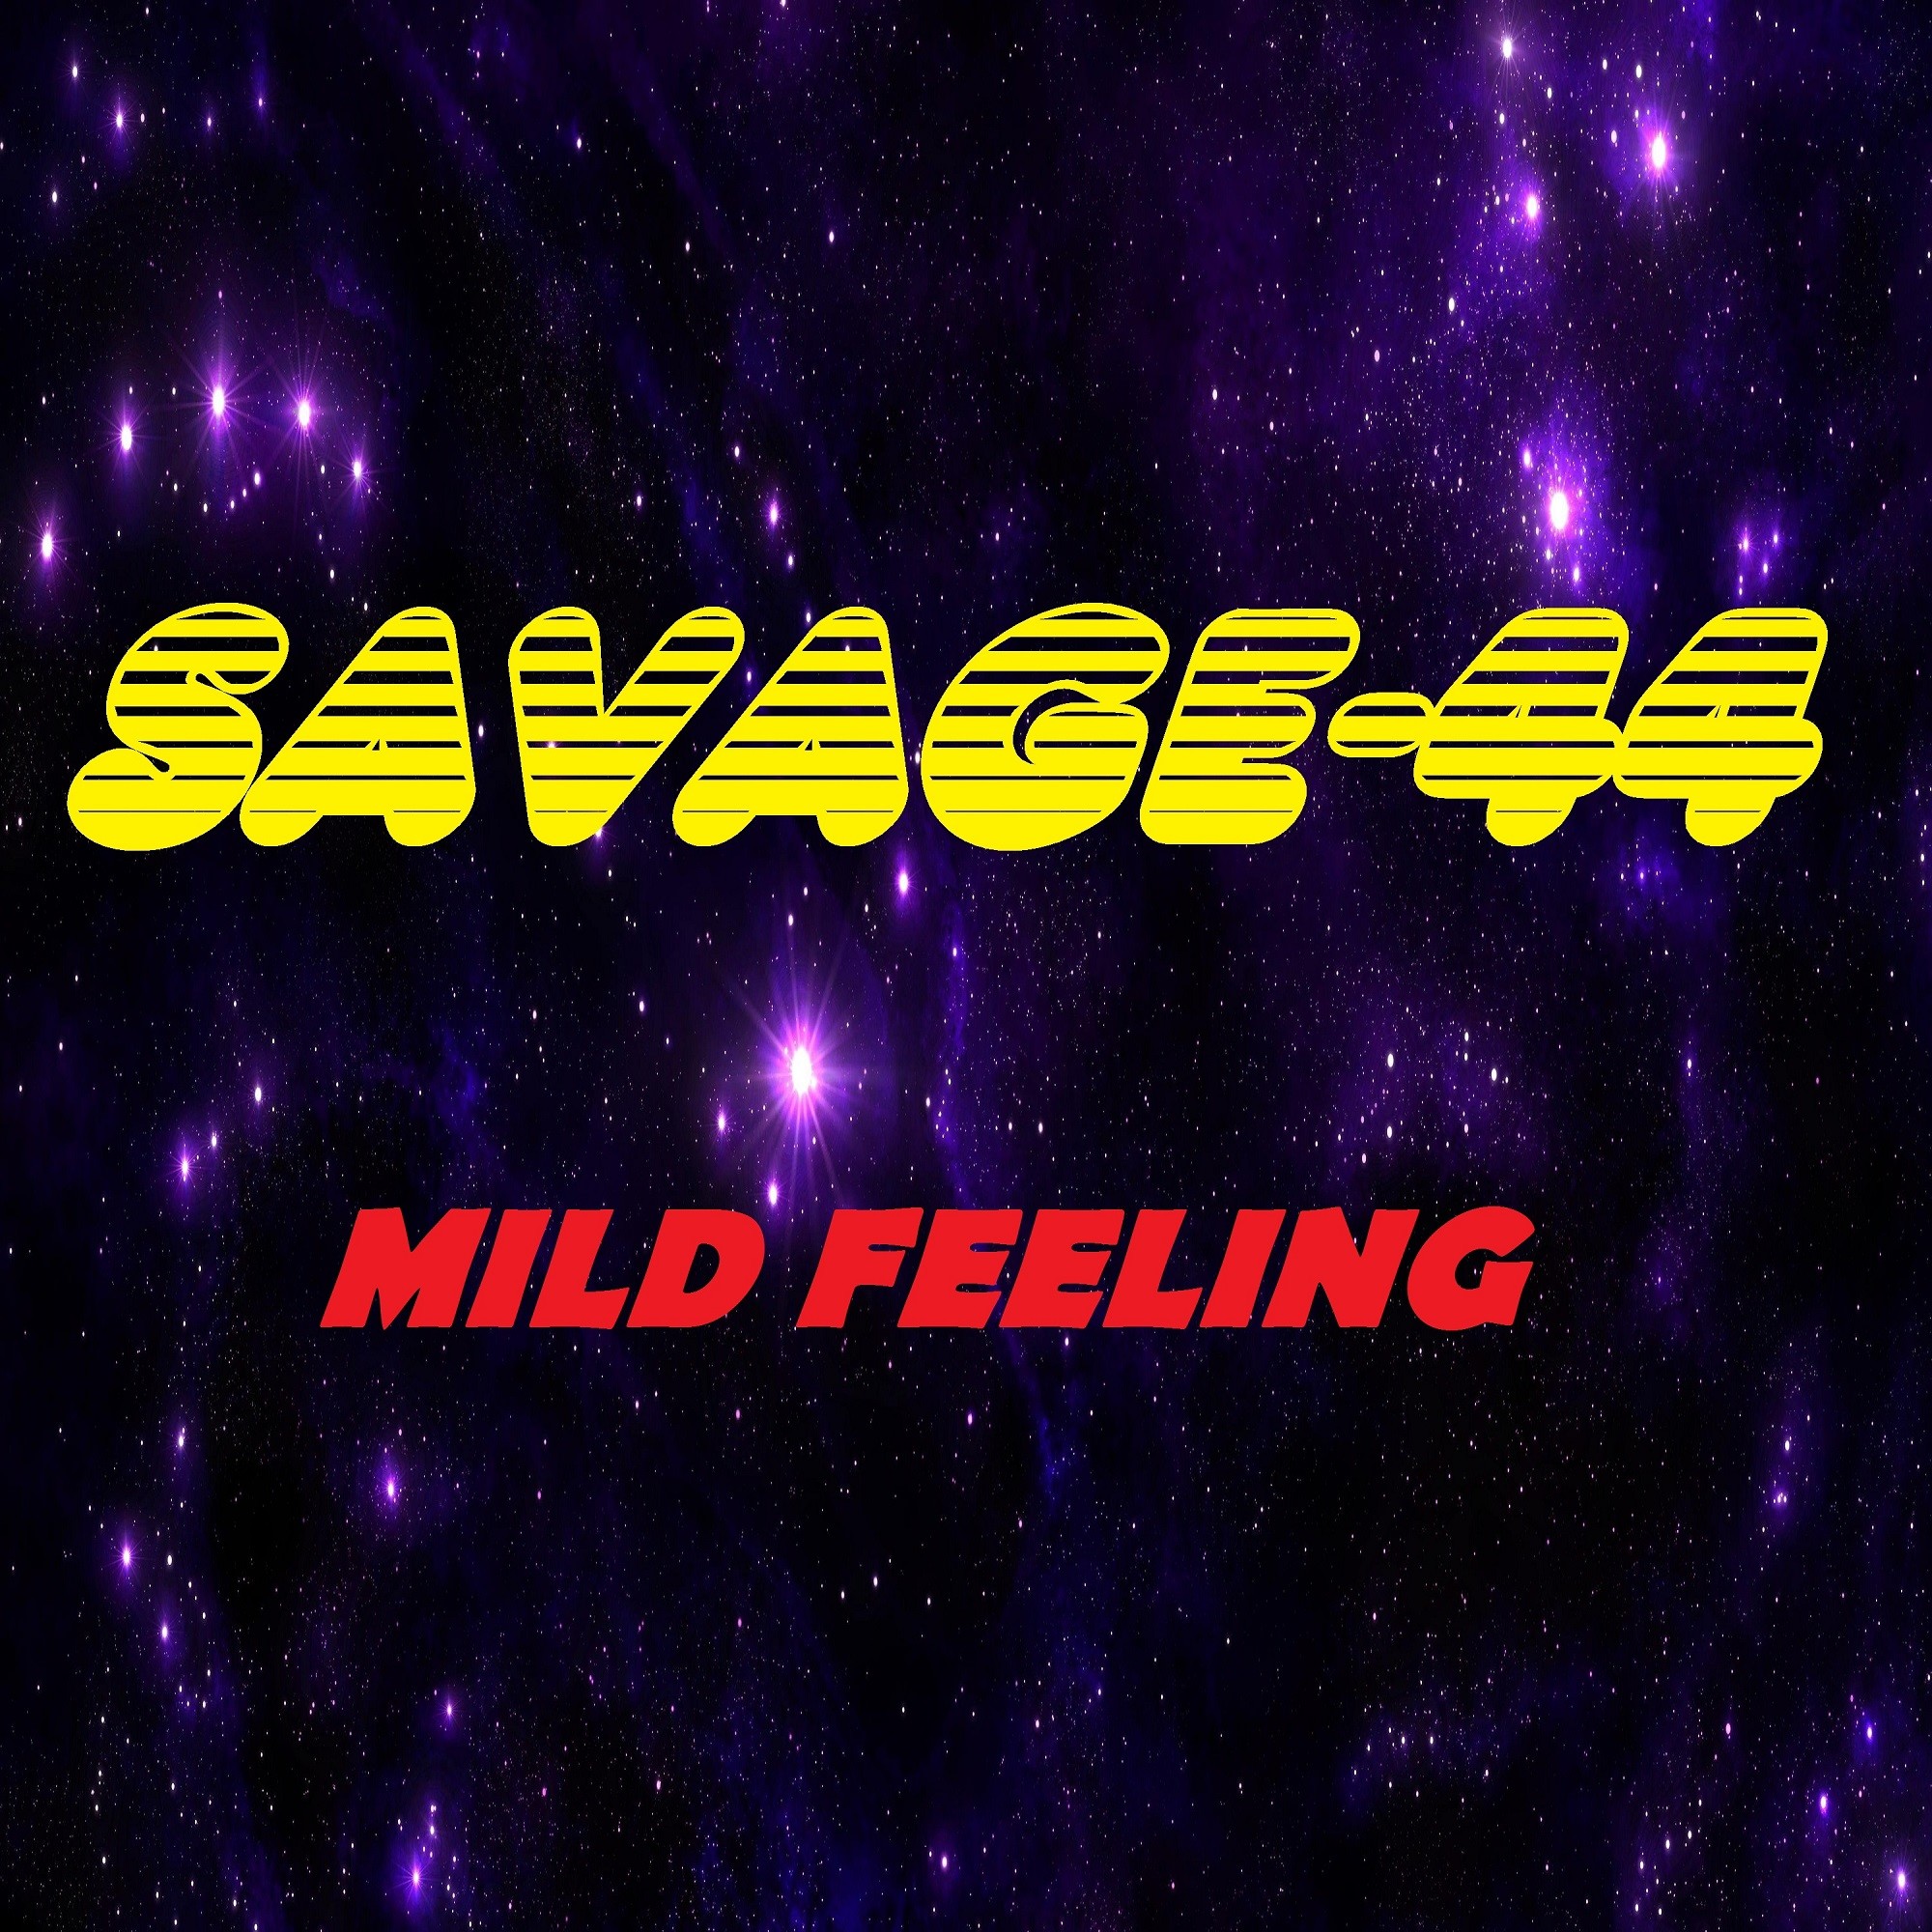 Savage 44 the music ring. Savage 44. DJ Savage 44. Саваж 44 Евроданс. Savage 44 Love emotion.